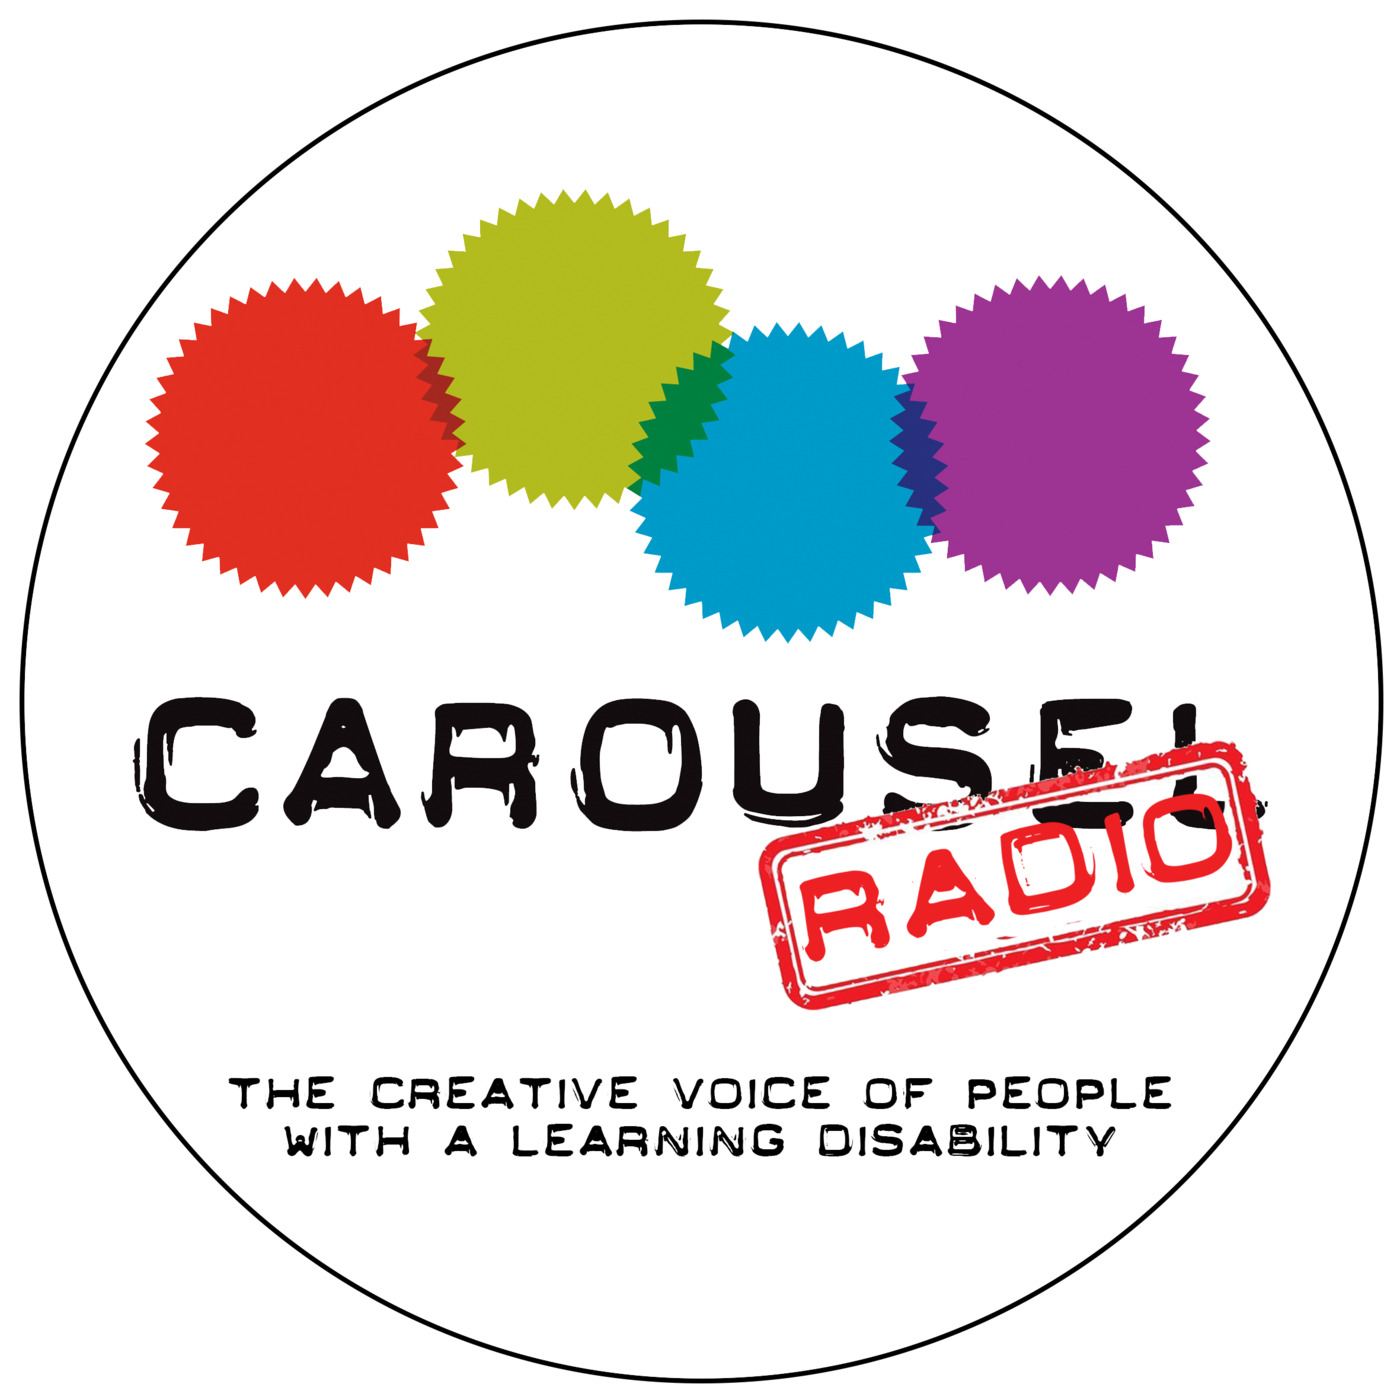 Carousel Radio at the Rockhouse Festival